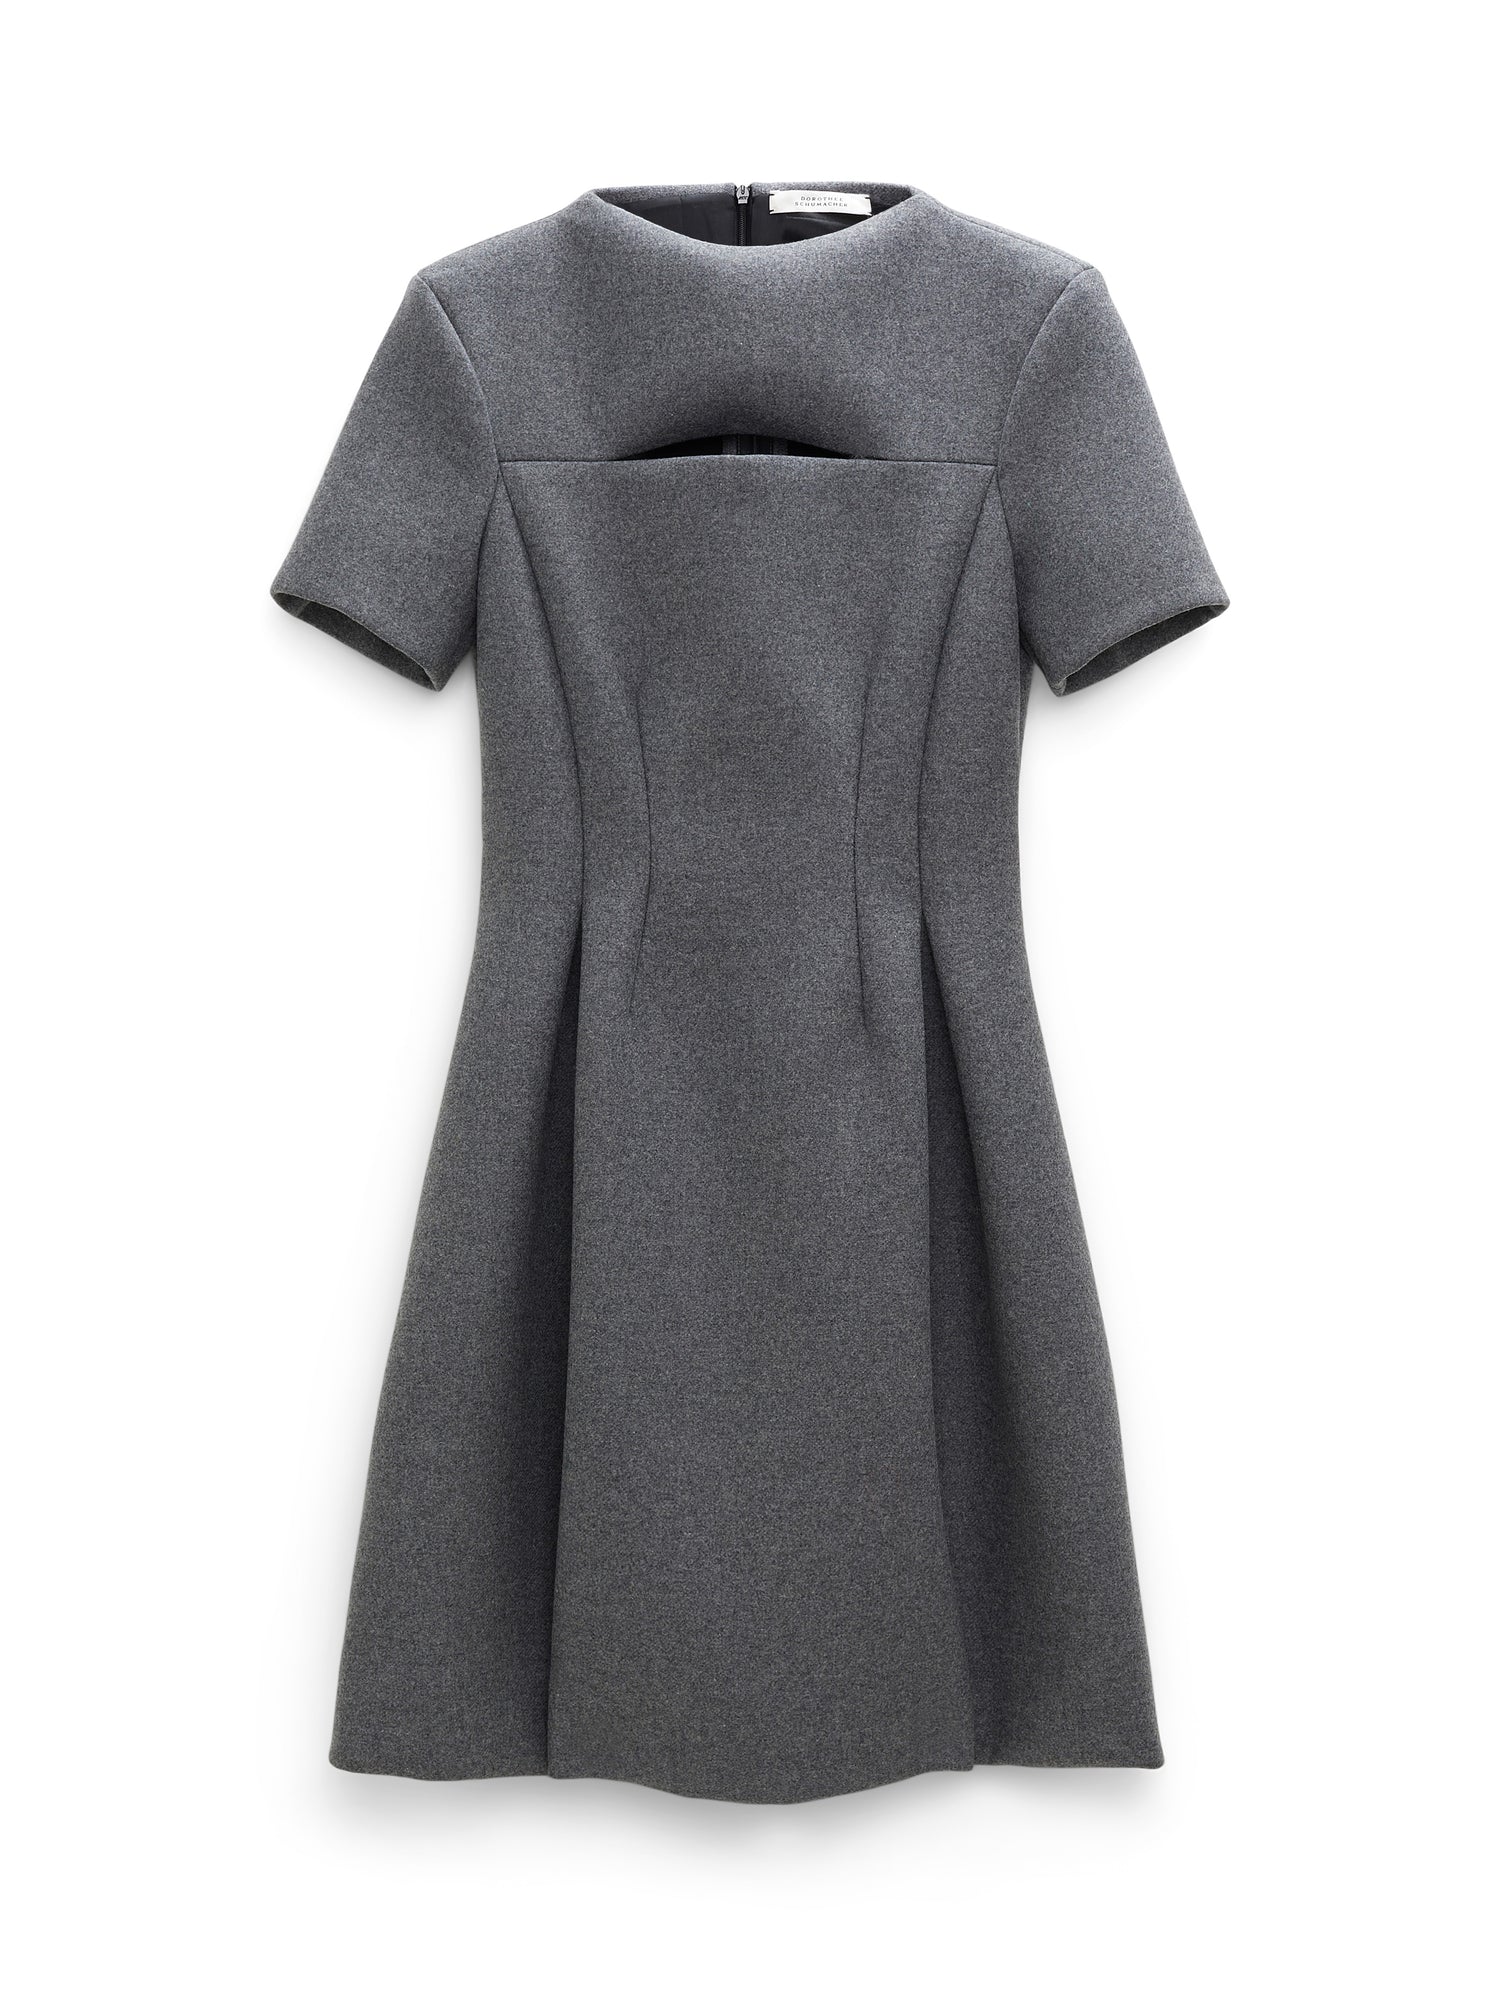 MODERN SOFTNESS dress, charcoal grey melange